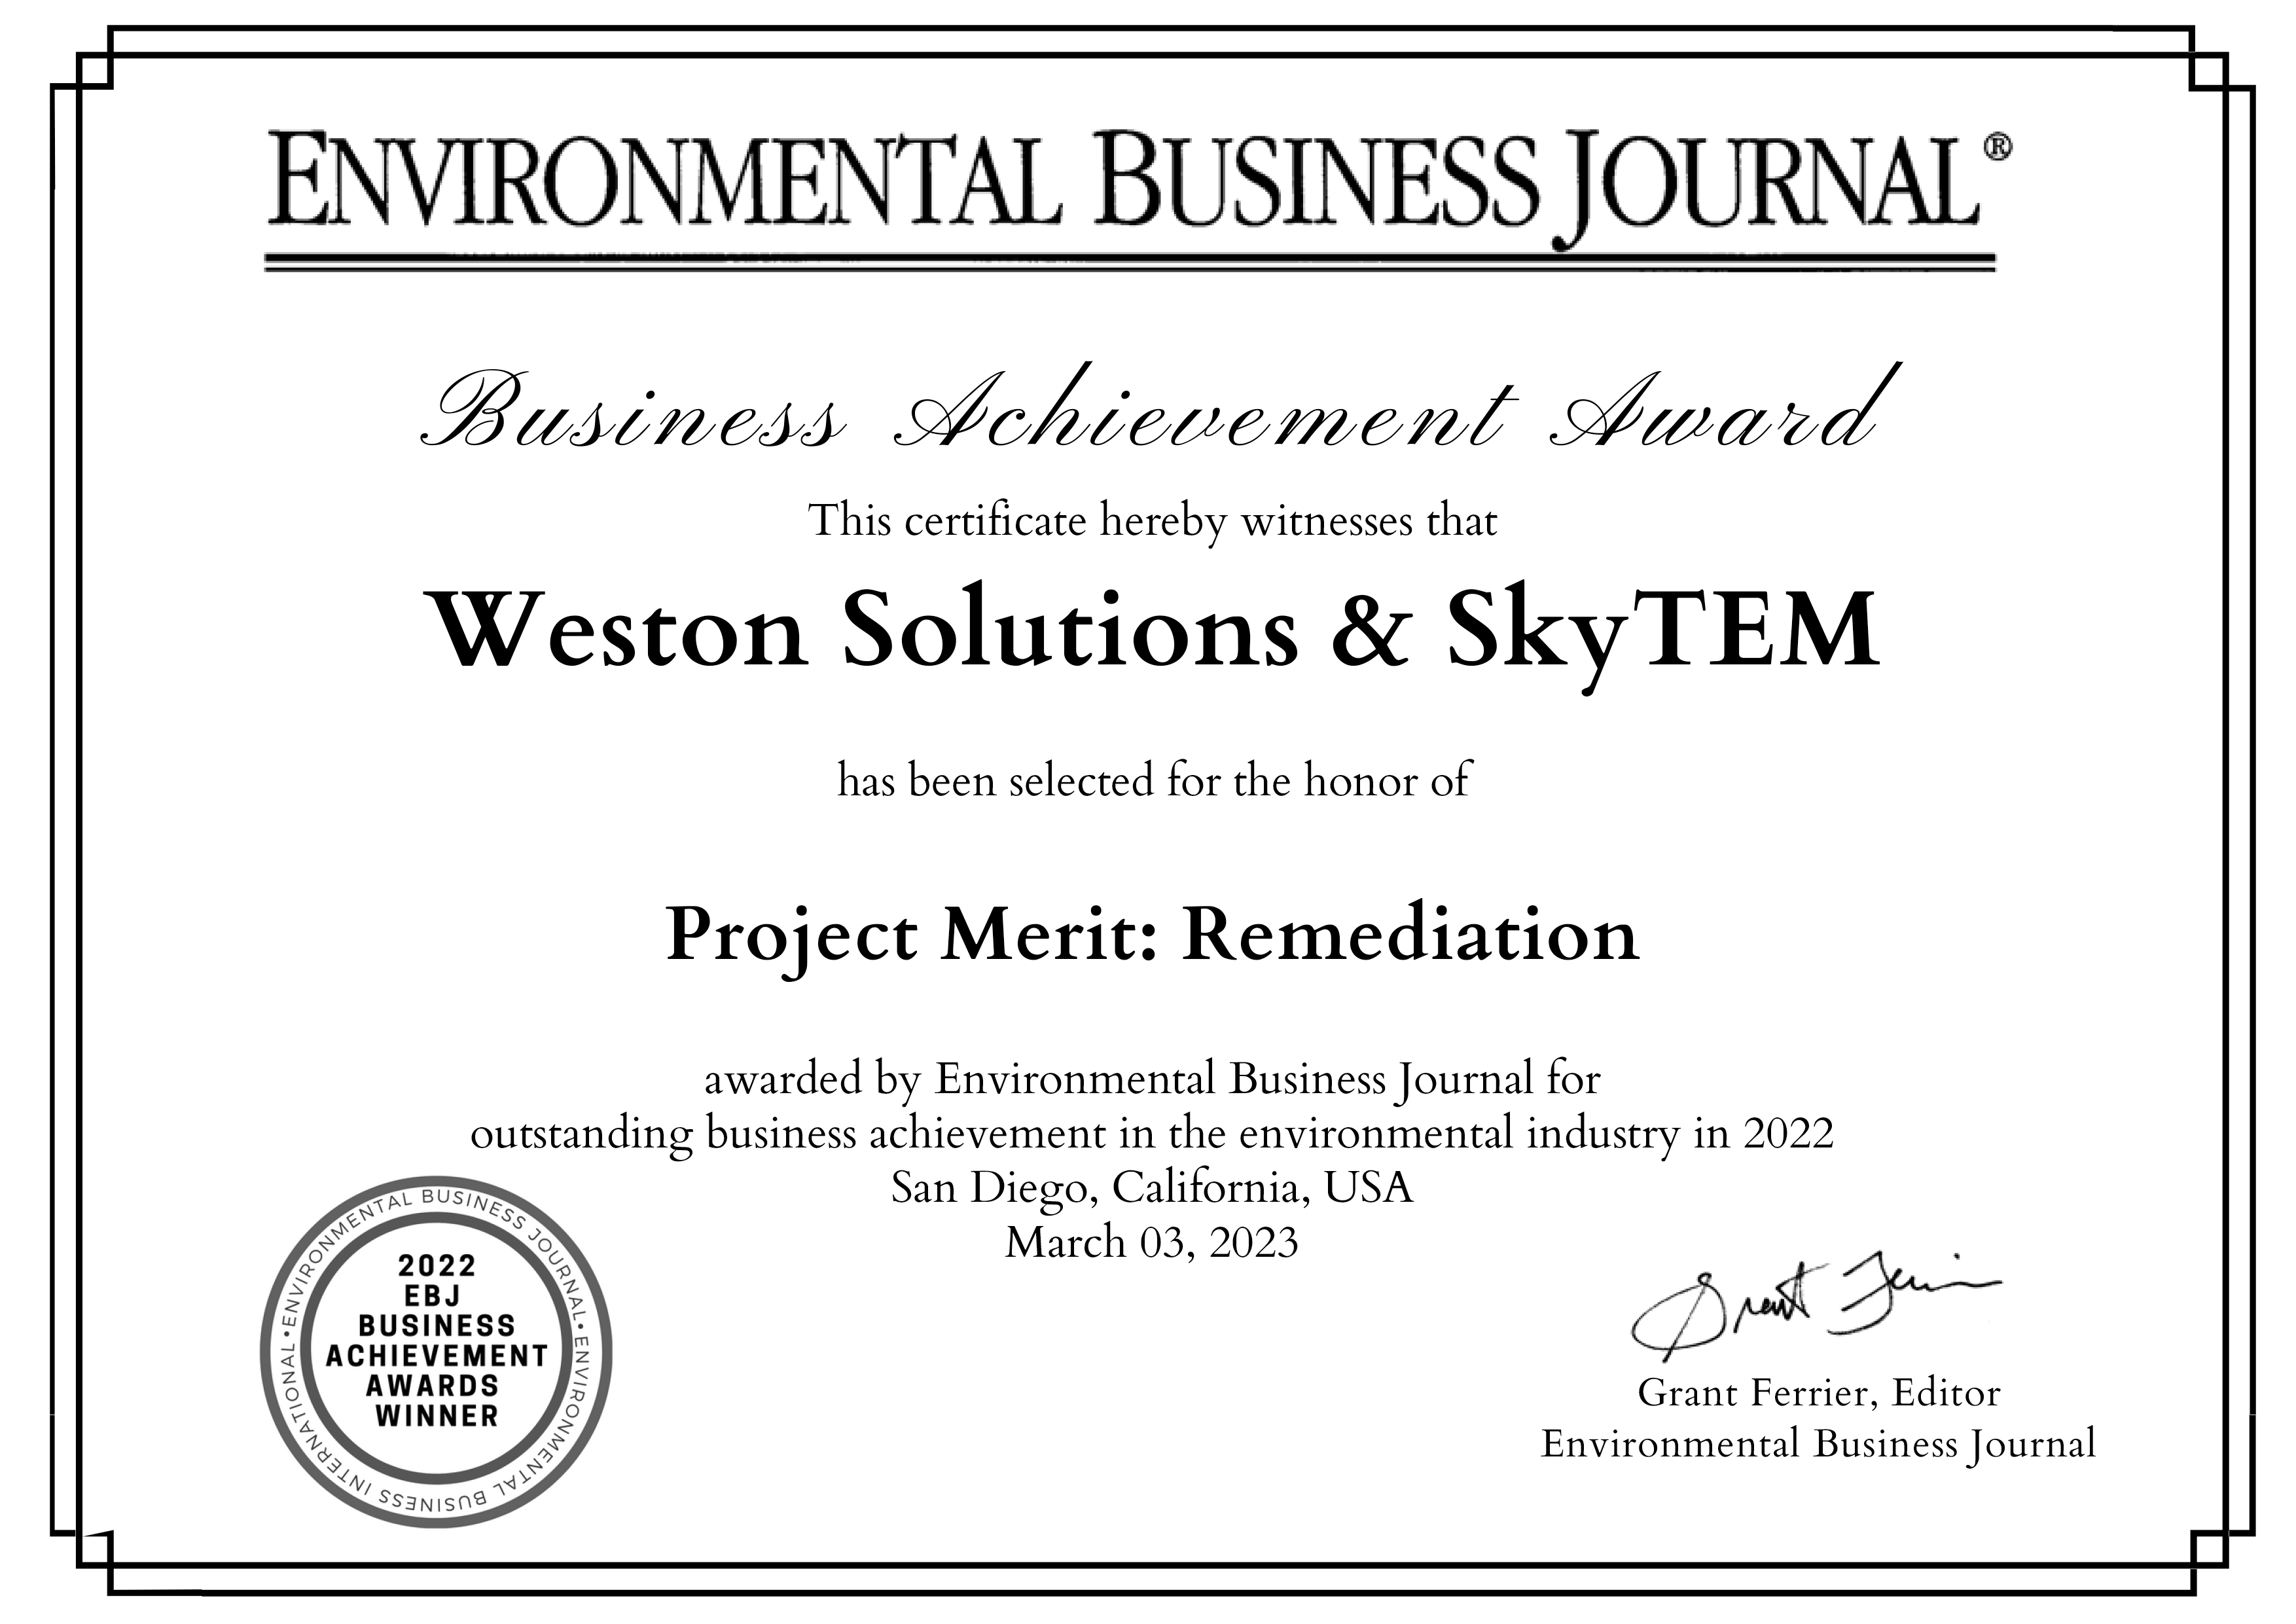 EBJ award certificate